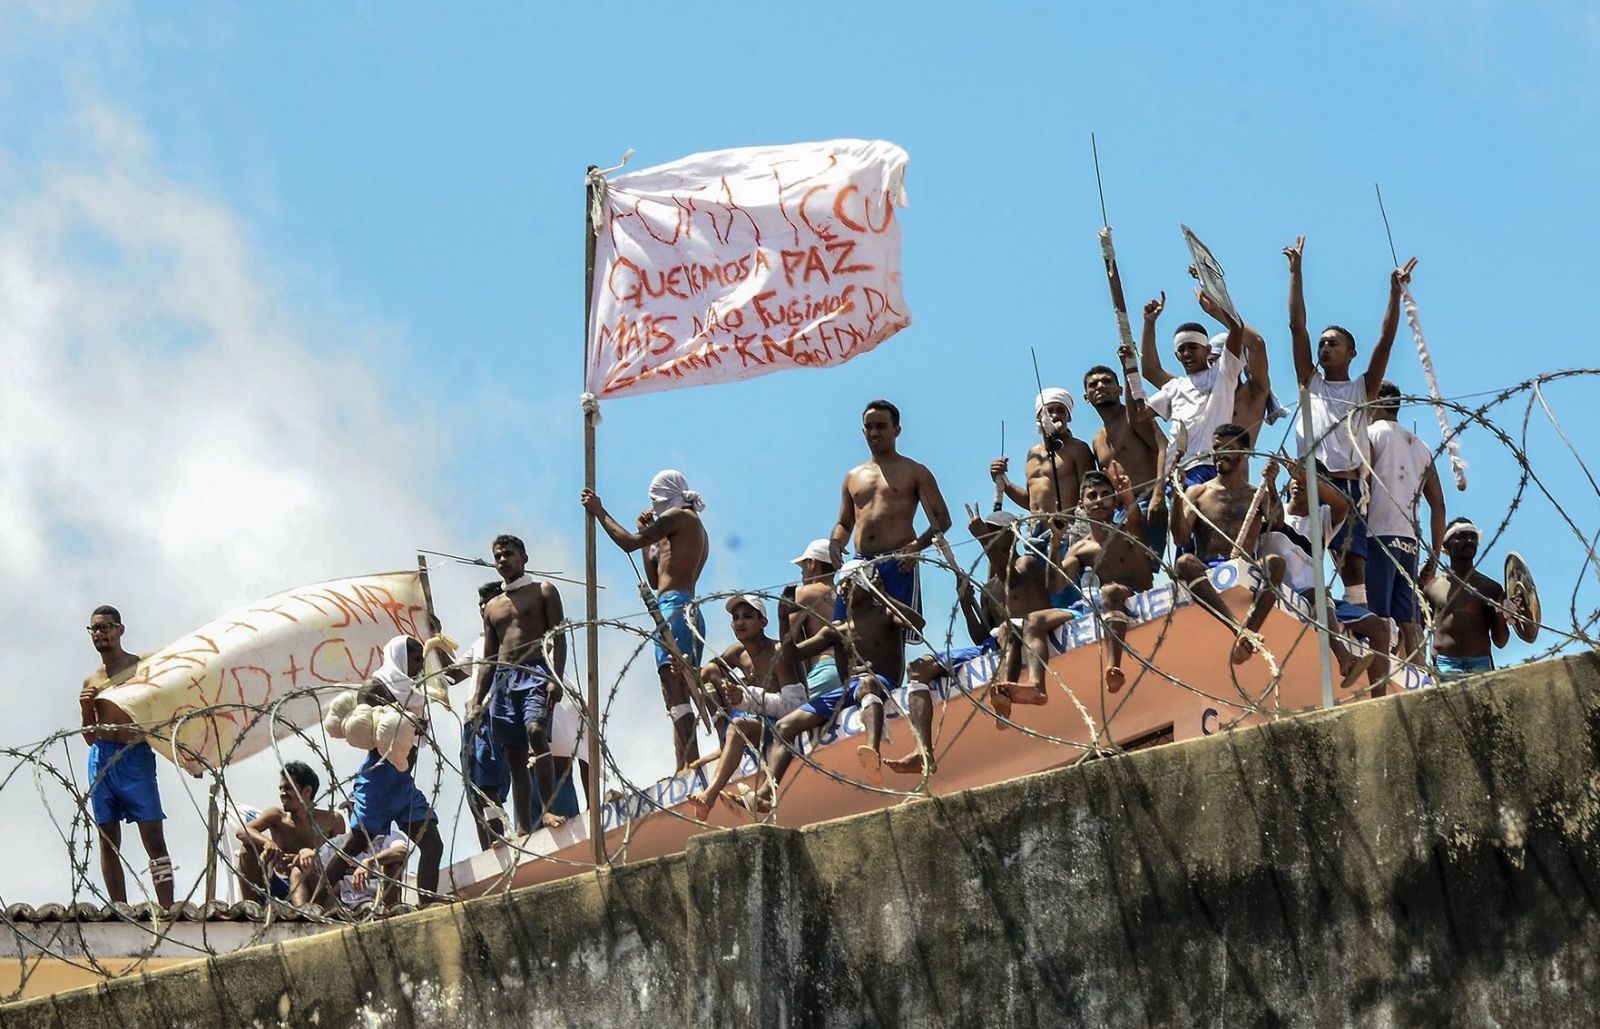 Guerra entre bandas causa cruel masacre en cárcel de Brasil que deja 57 muertos